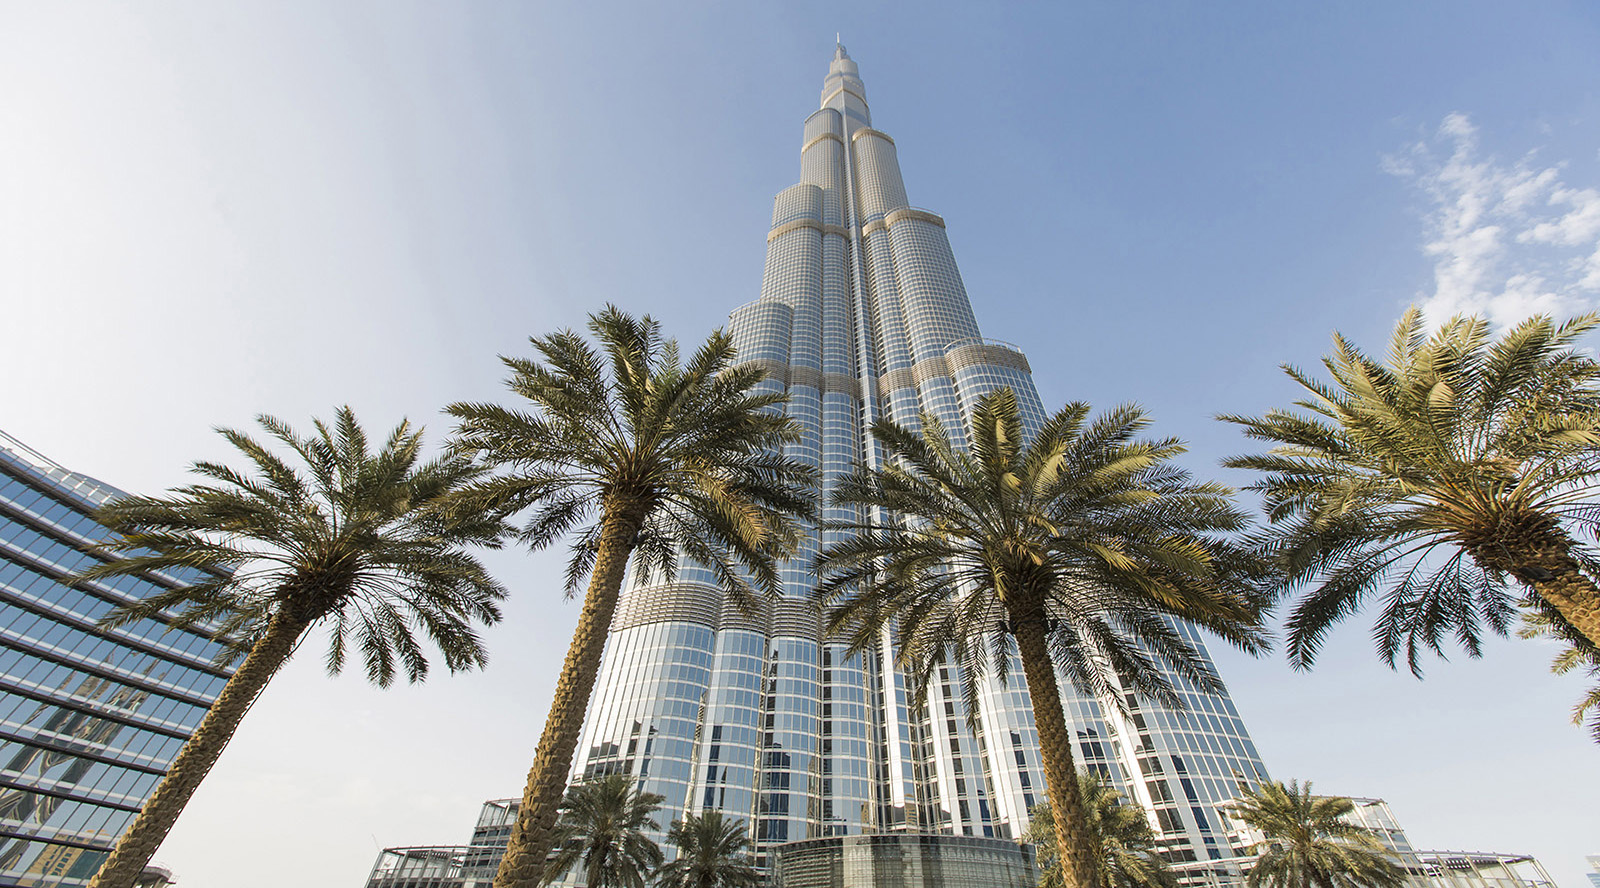 Burj Khalifa At The Top